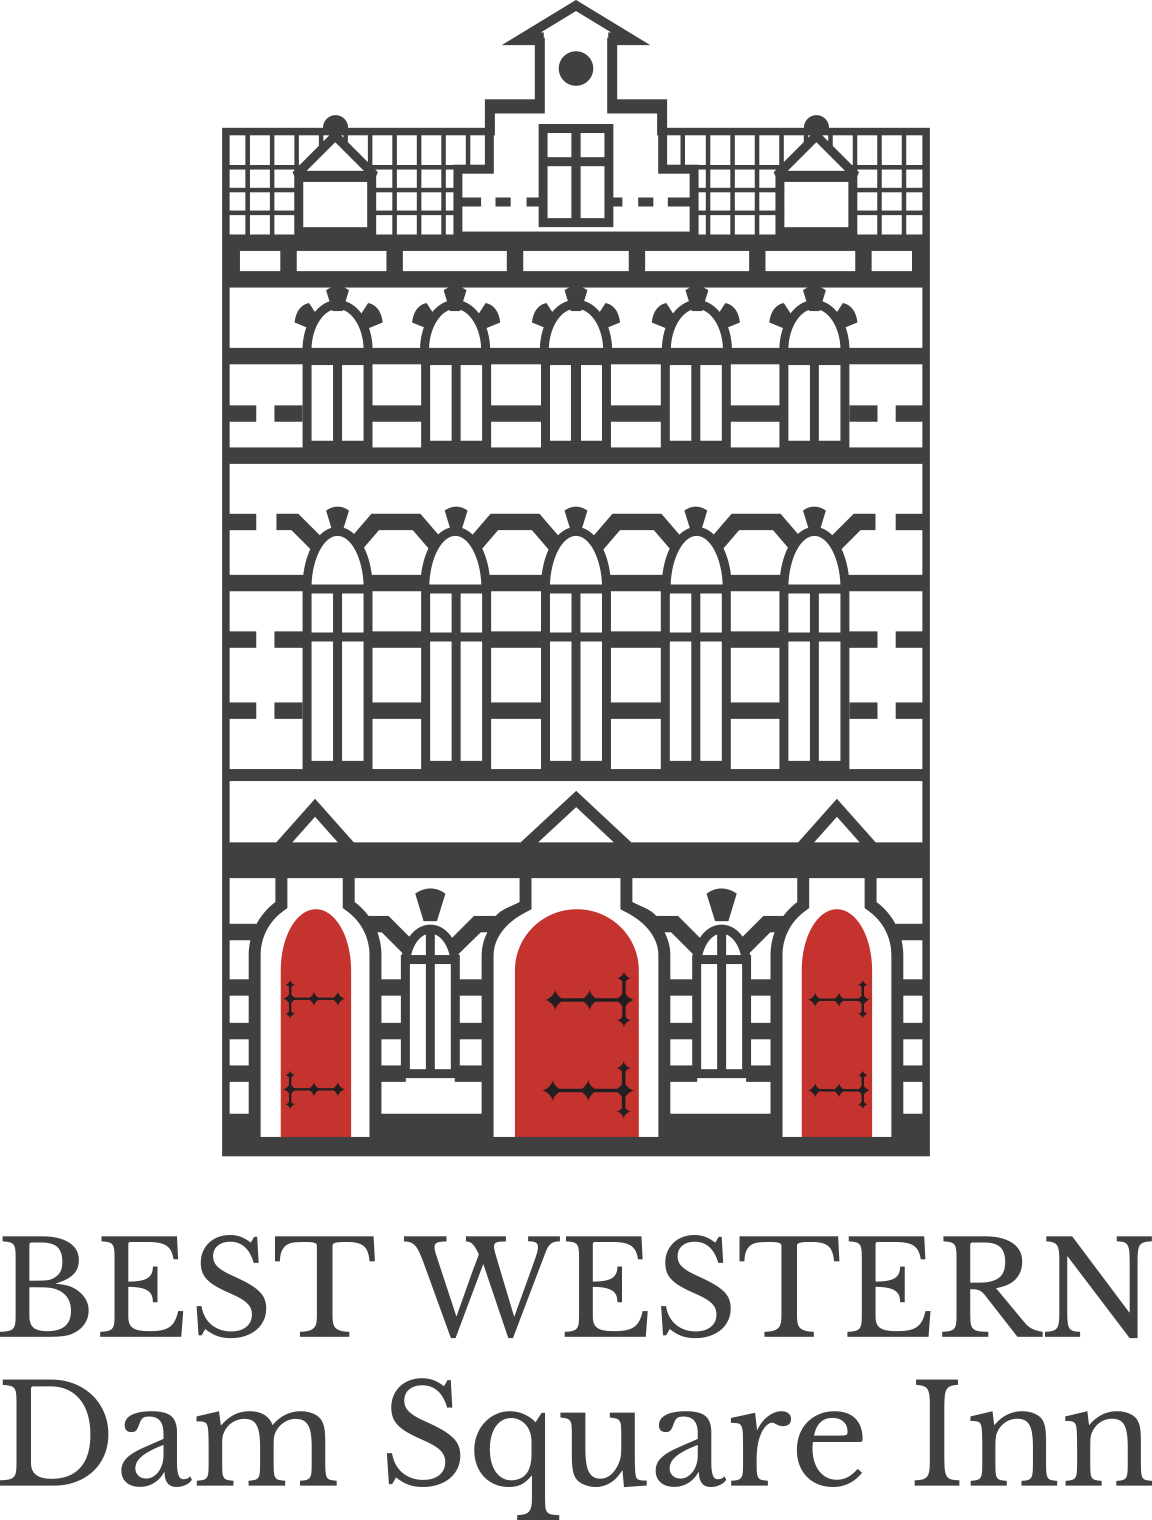 Best Western Dam Square Inn